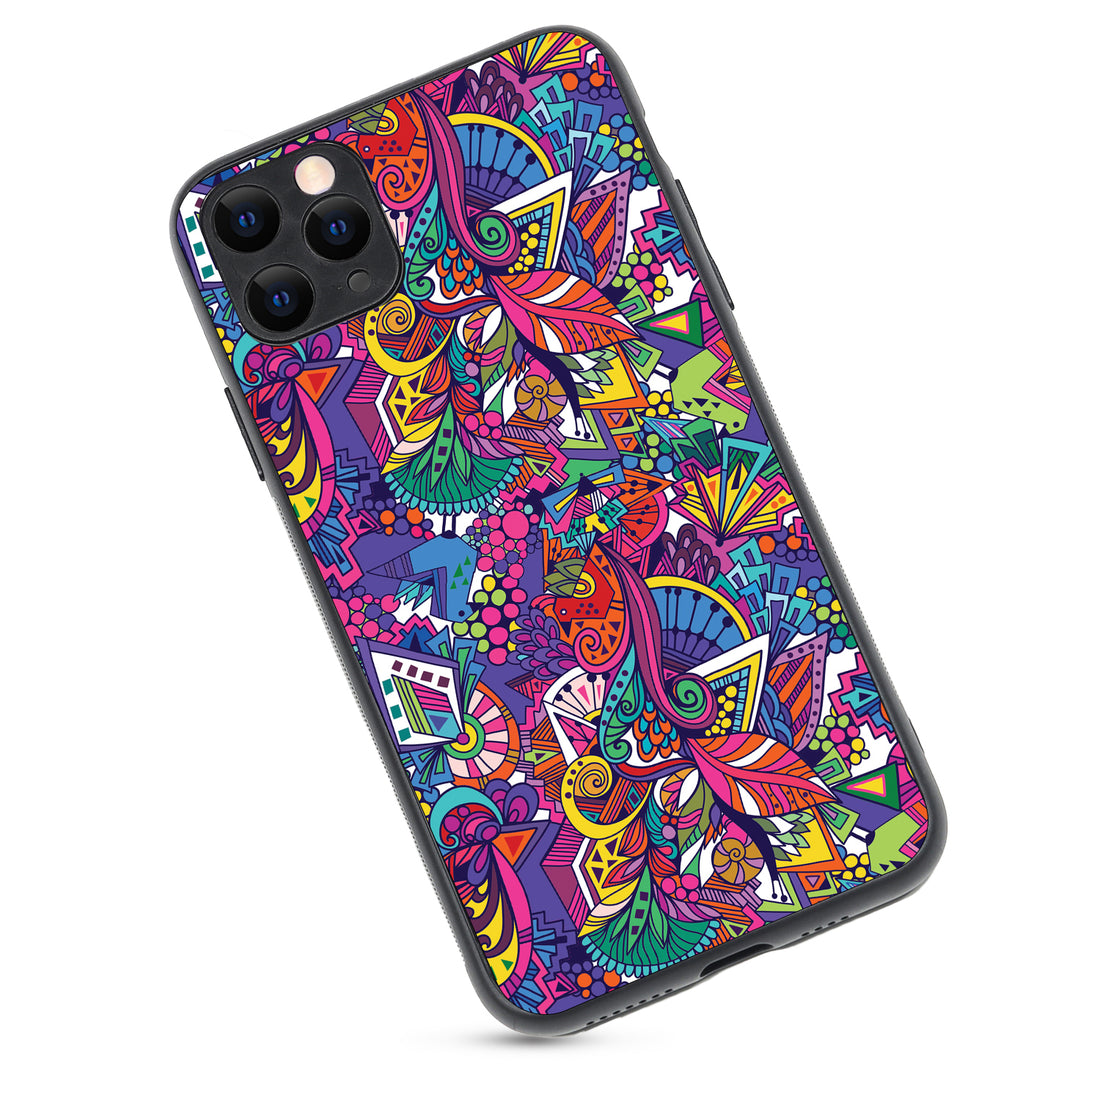 Colourful Doodle iPhone 11 Pro Max Case